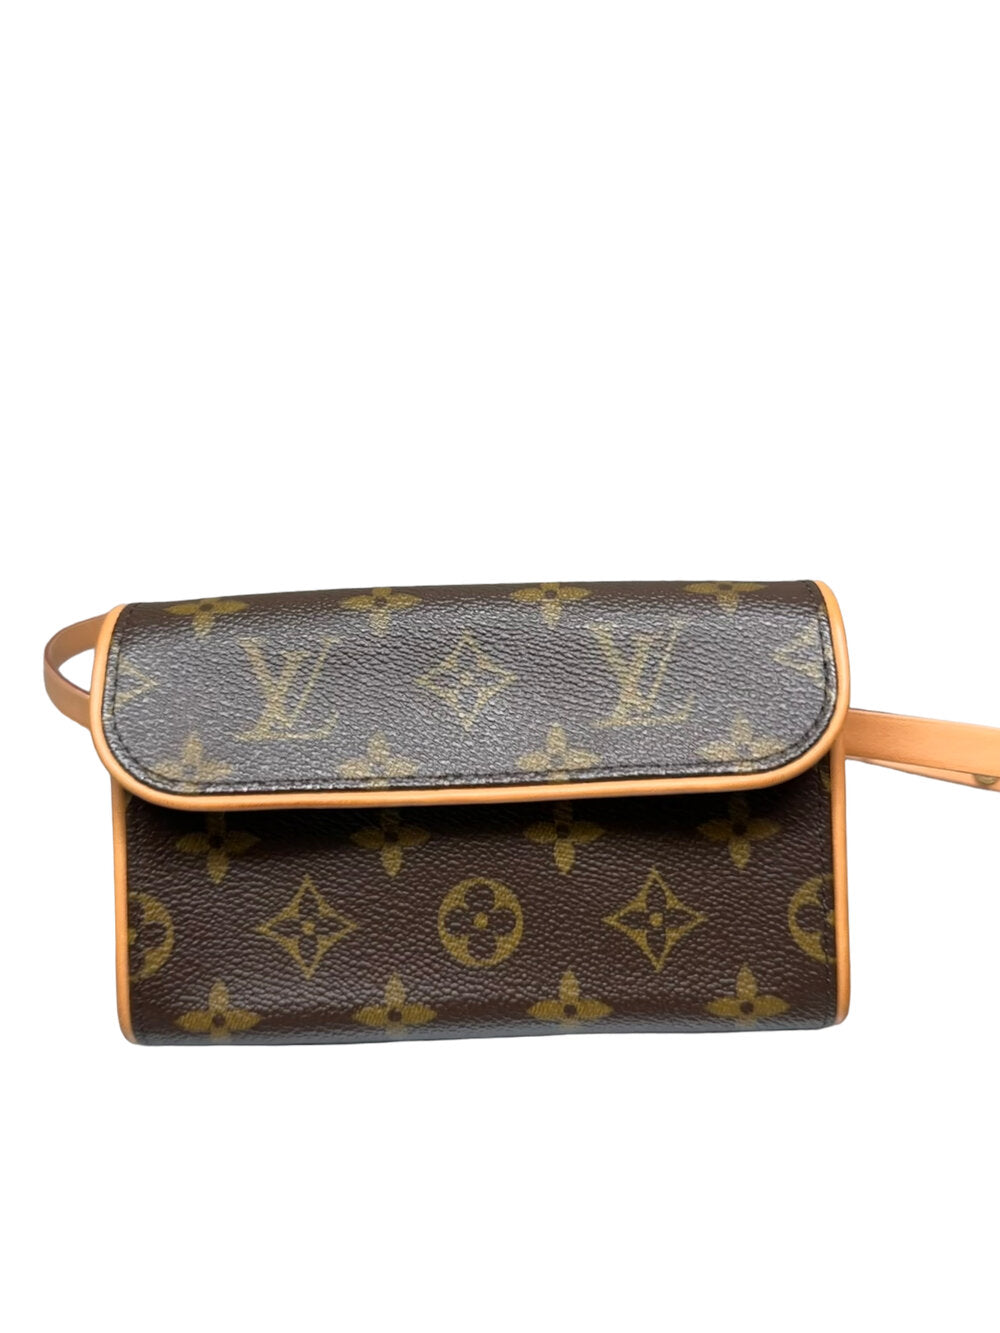 AUTH Louis Vuitton Monogram Florentine Small Belt Bag with Dustbag